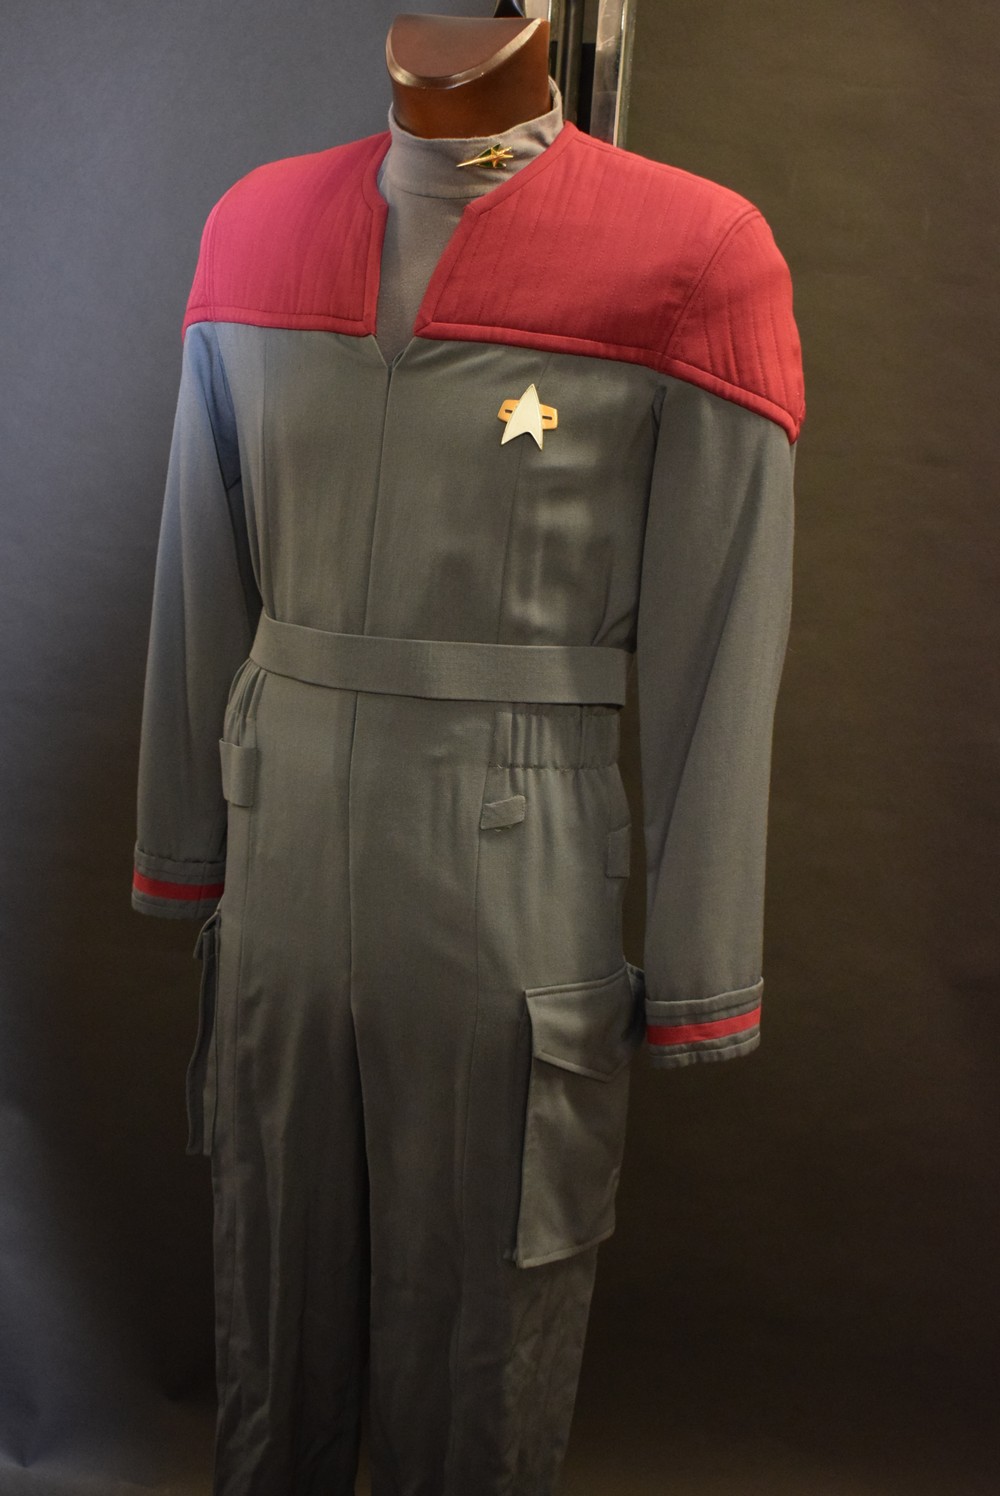 Starfleet Cadet Uniform - Series: Star Trek Deep Space 9: Episode: Valiant A grey and burgandy